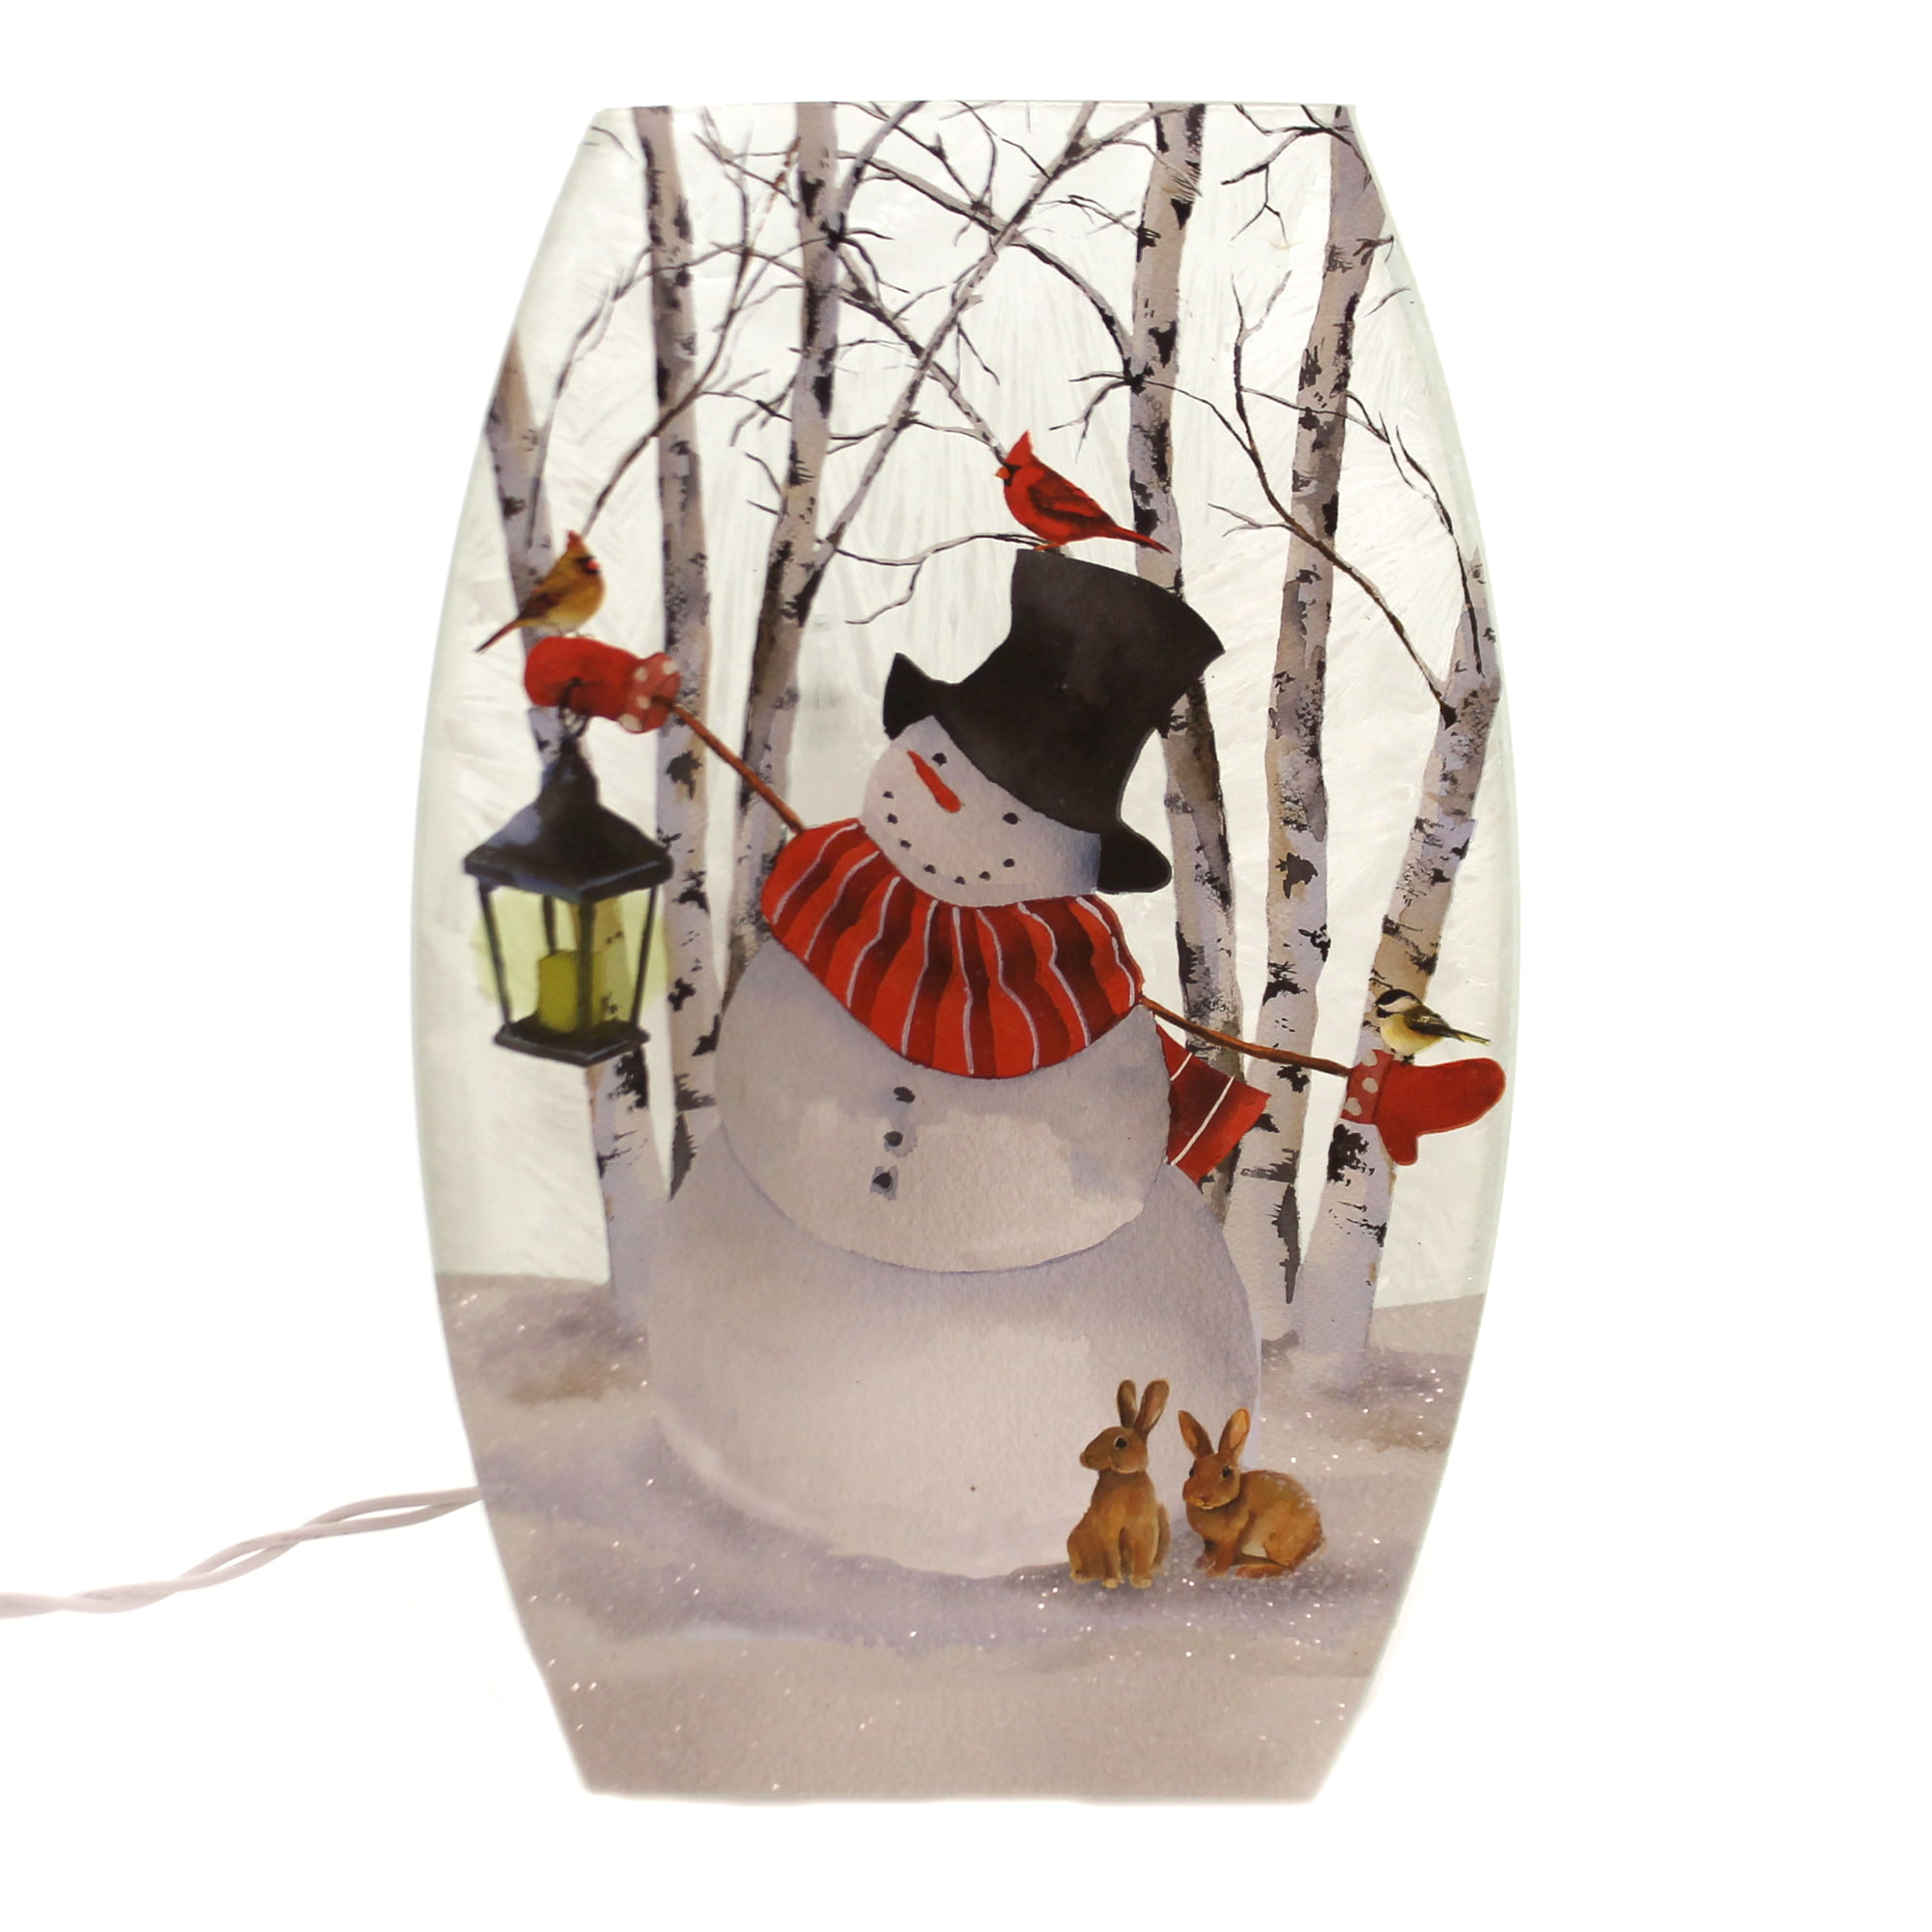 Snowman & Cardinals Lighted Narrow Glass 8" Vase by Stony Creek